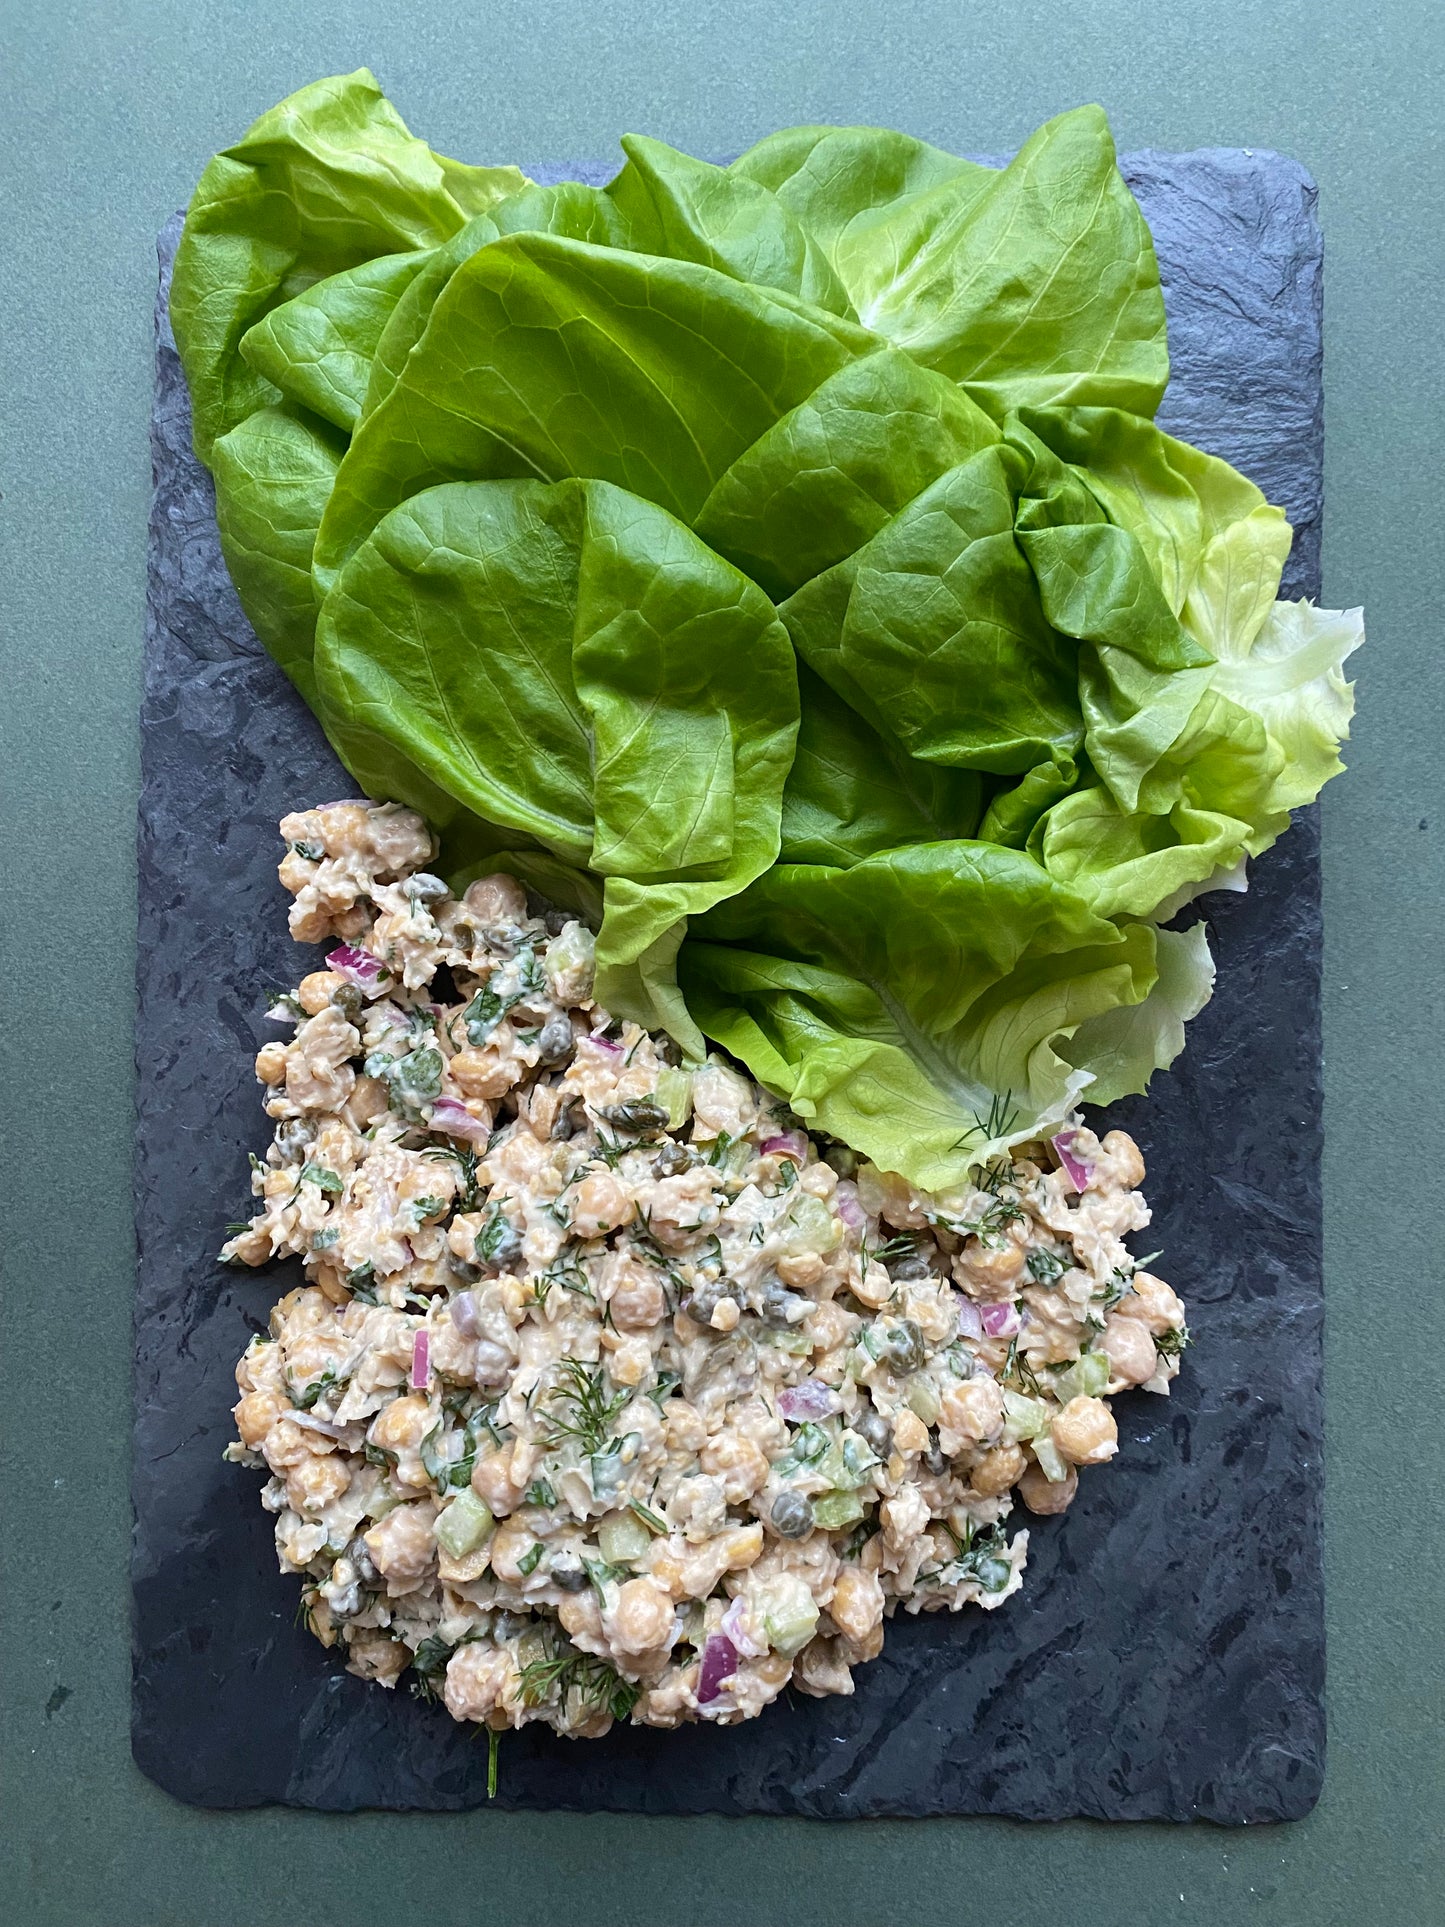 Vegan Chickpea "Tuna" Salad Lettuce Cups